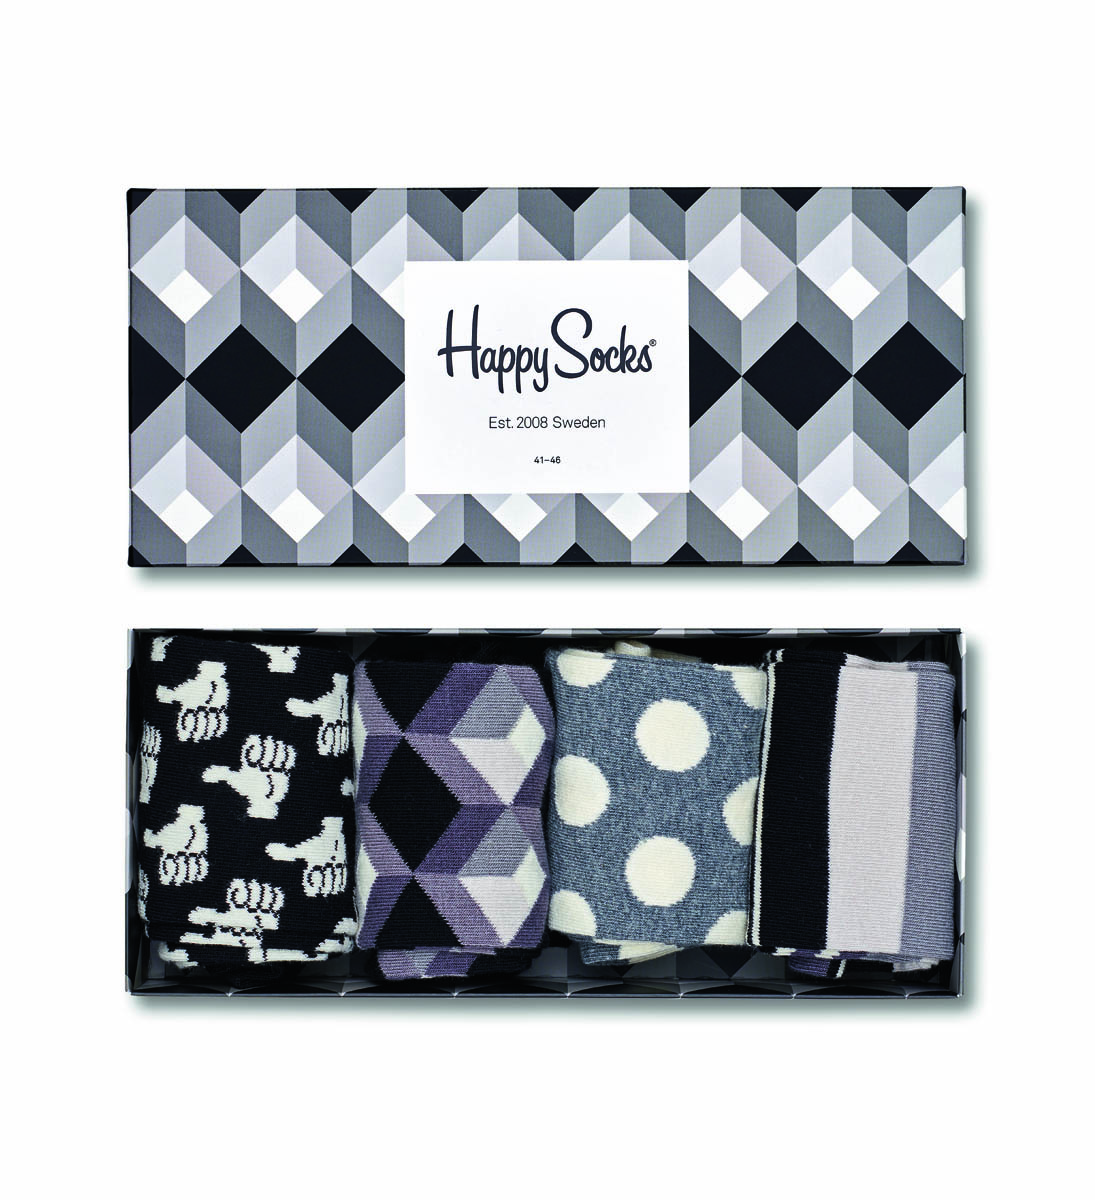 Носки Happy socks 4-Pack Black & White Socks Gift Set XBLW09  - купить